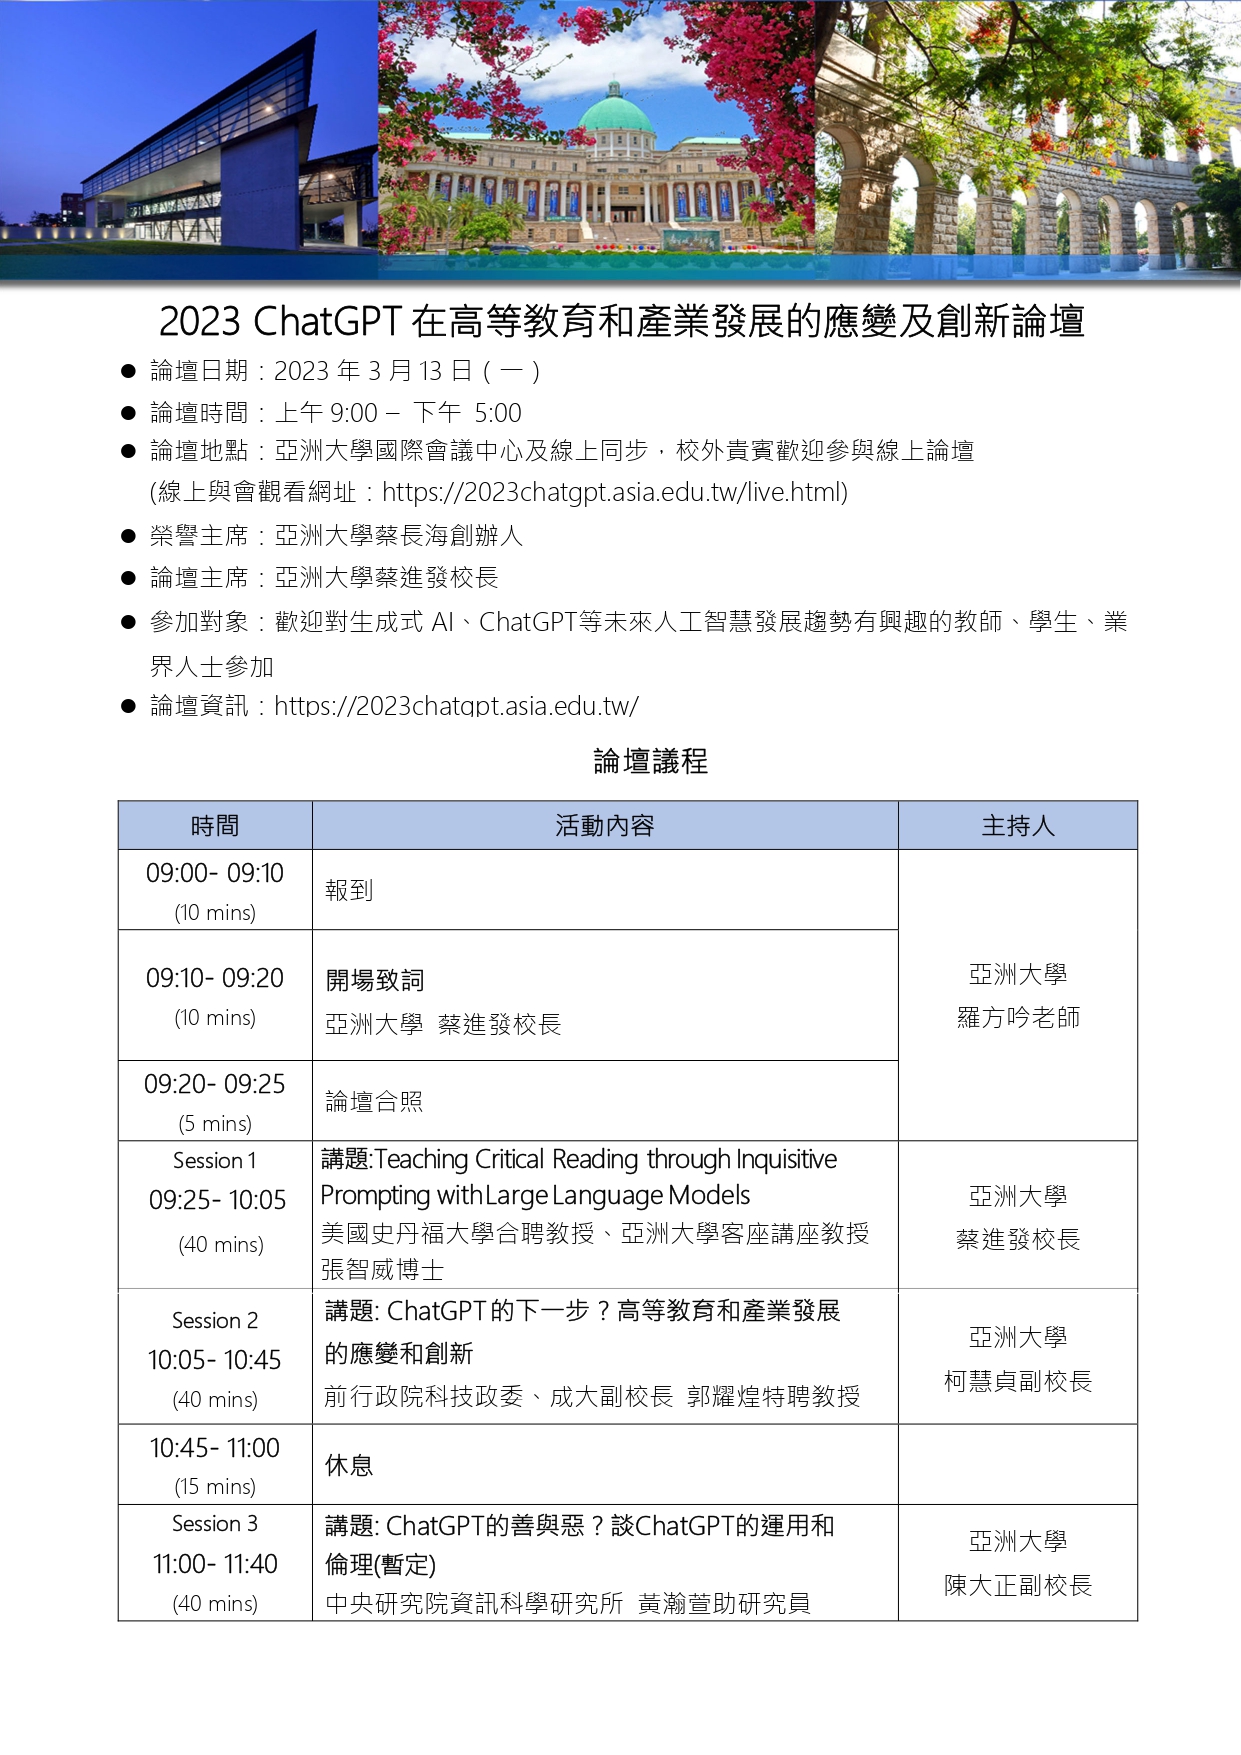 2023-ChatGPT-在高等敎育和产业发展的应变及创新论坛-_page-0001